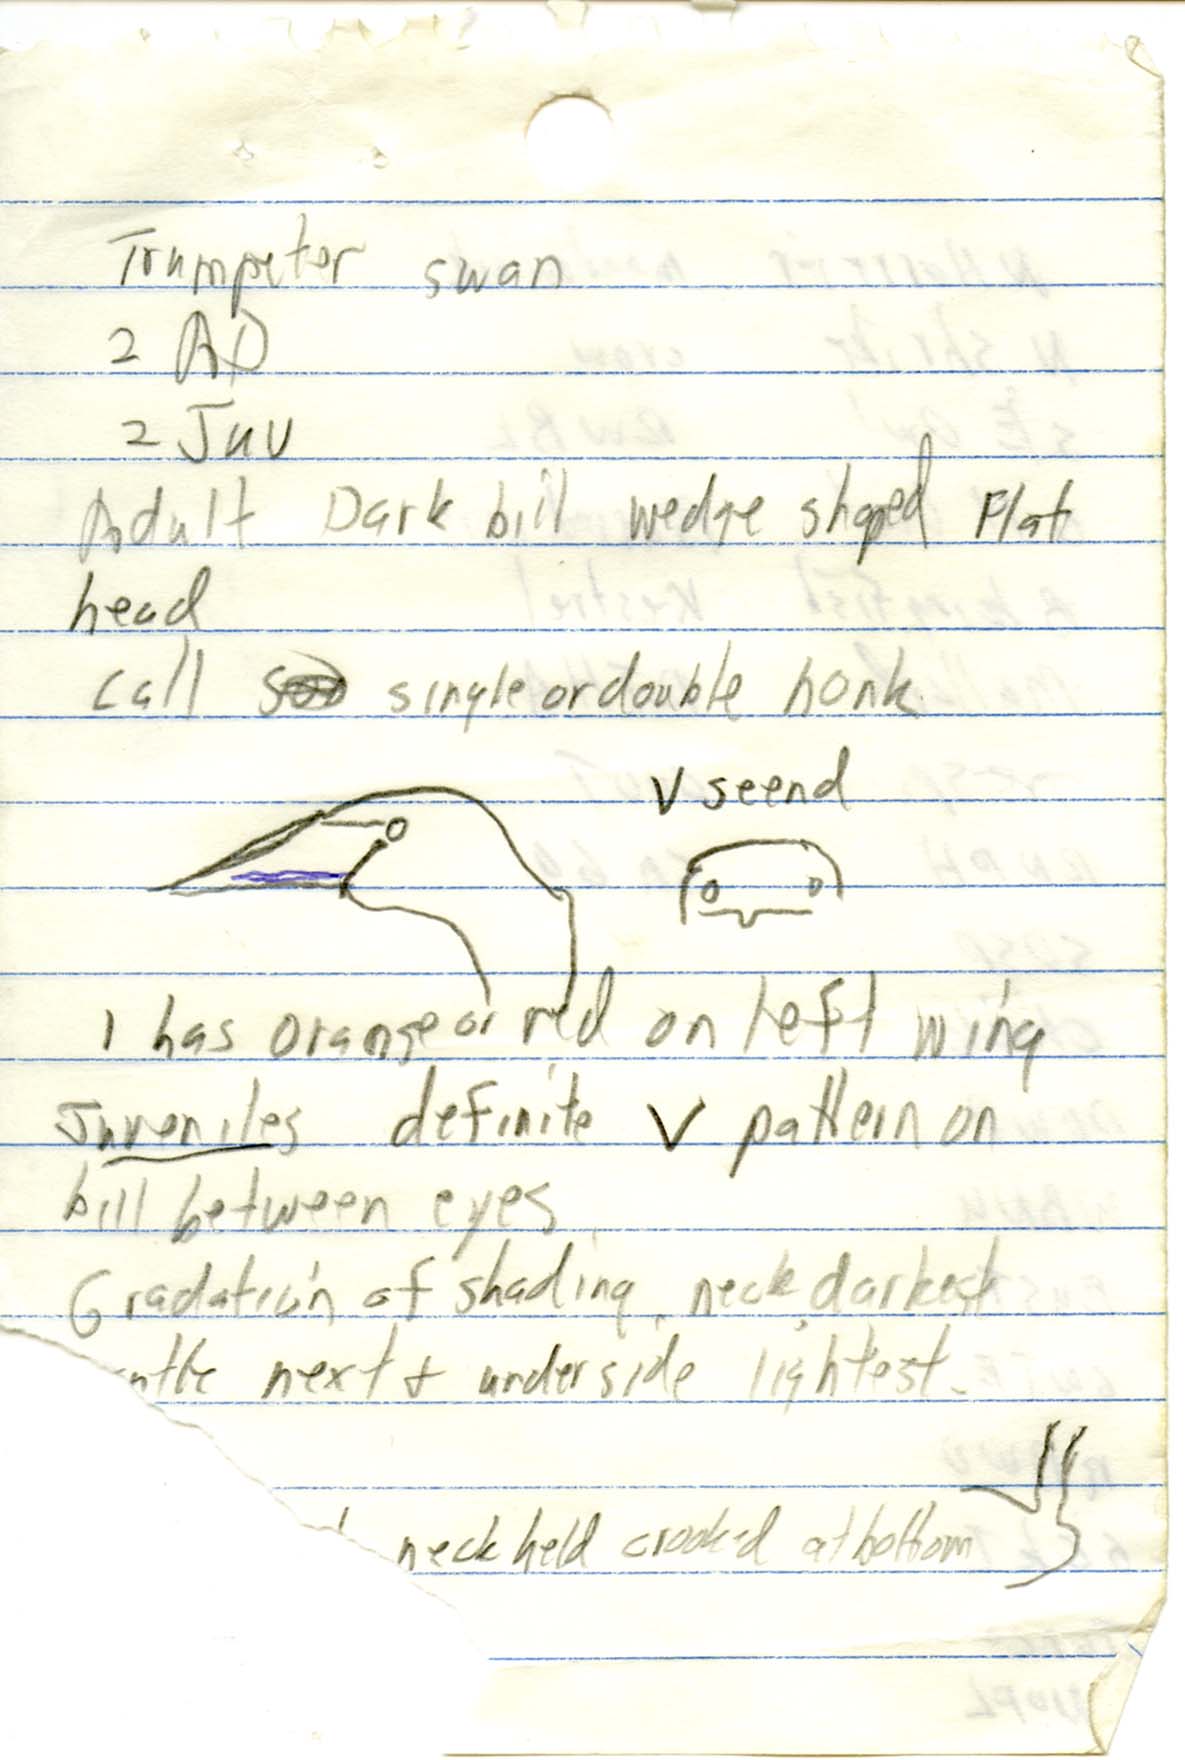 Rare bird documentation form for Trumpeter Swan at Boyer Chute National Wildlife Refuge, 1999